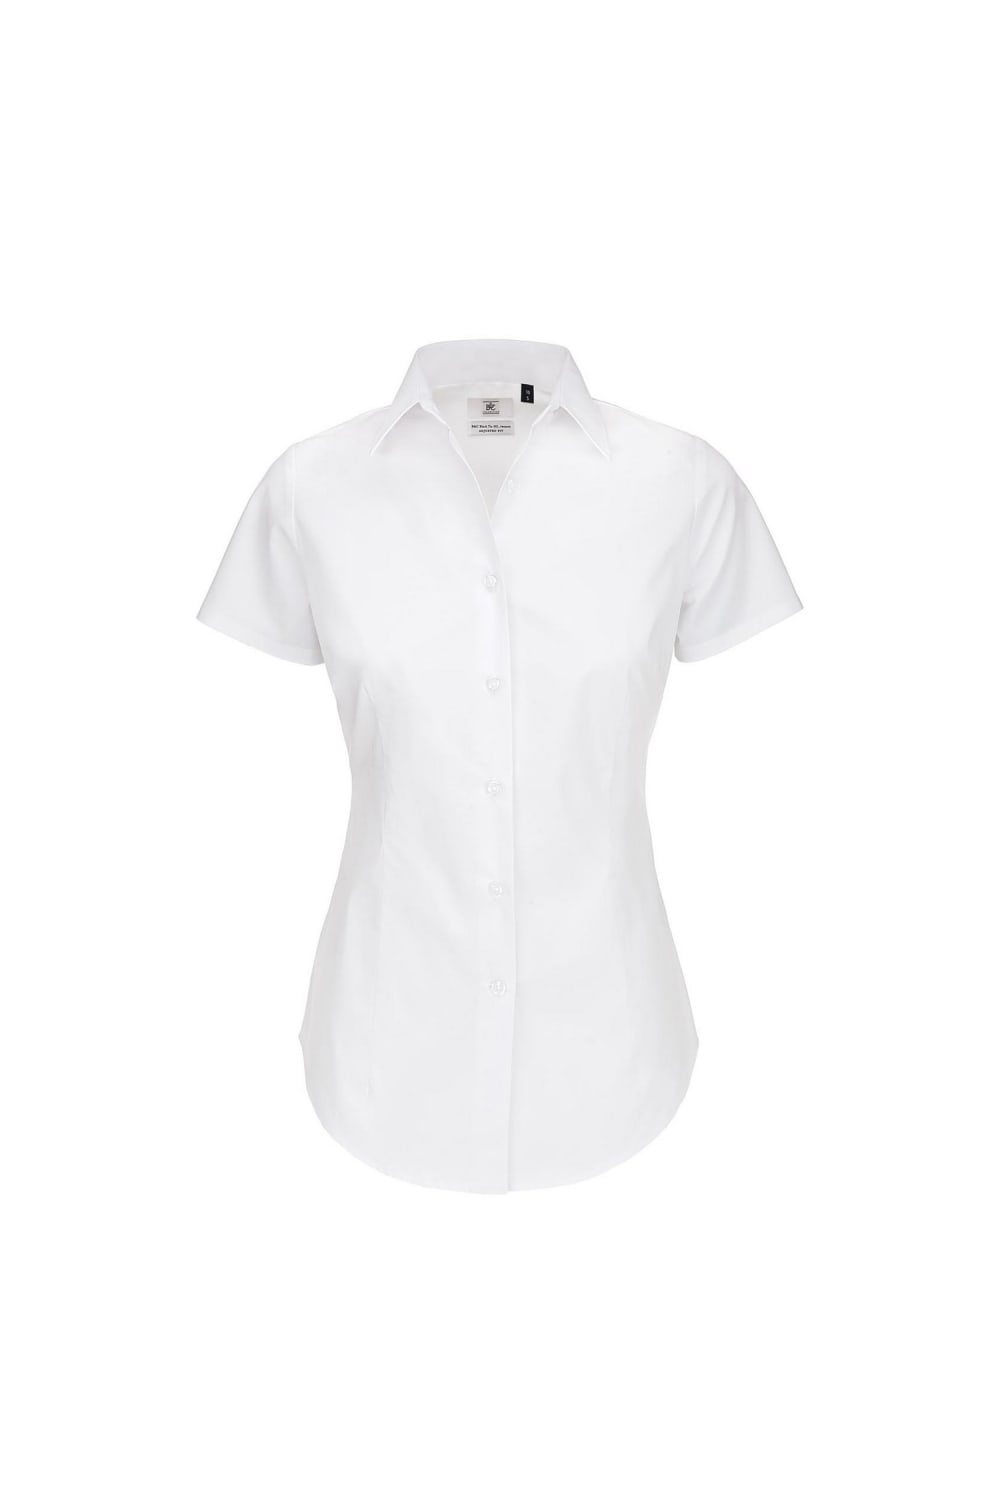 B&C Womens/Ladies Black Tie Formal Short Sleeve Work Shirt (White)